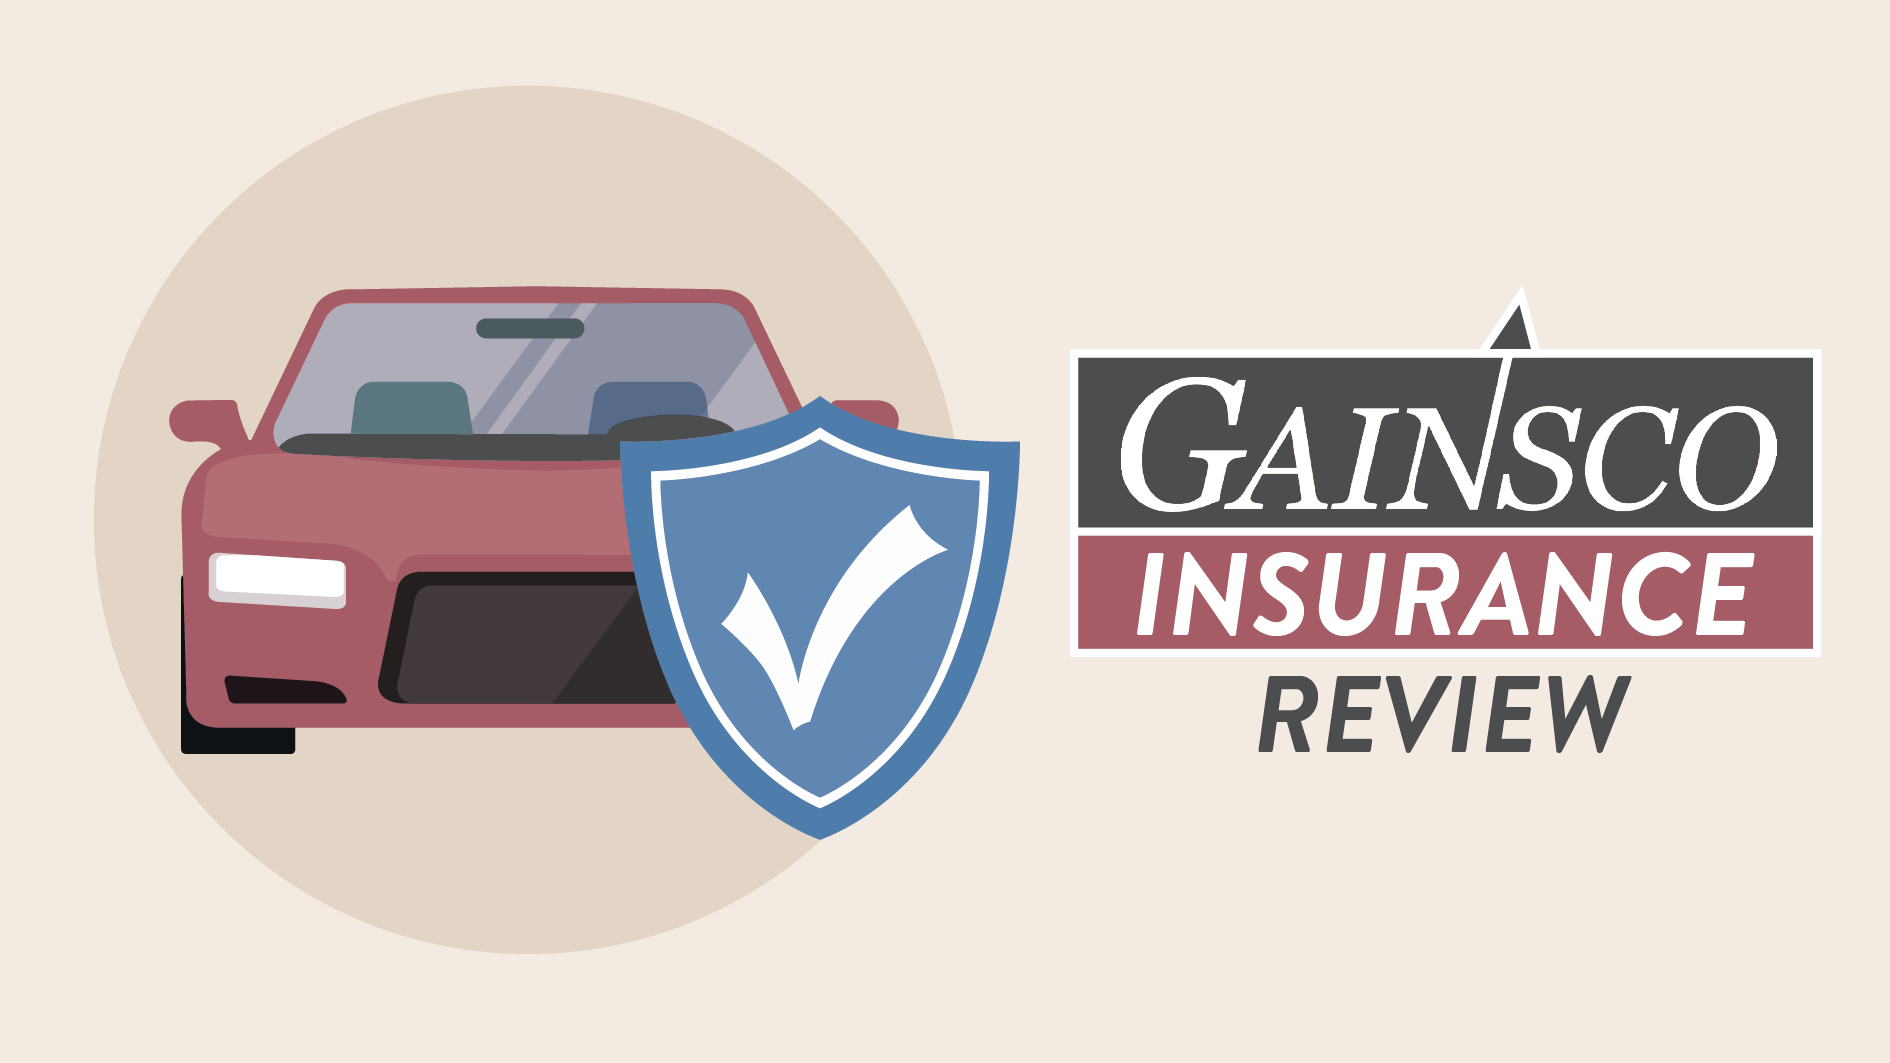 Gainsco Insurance Review